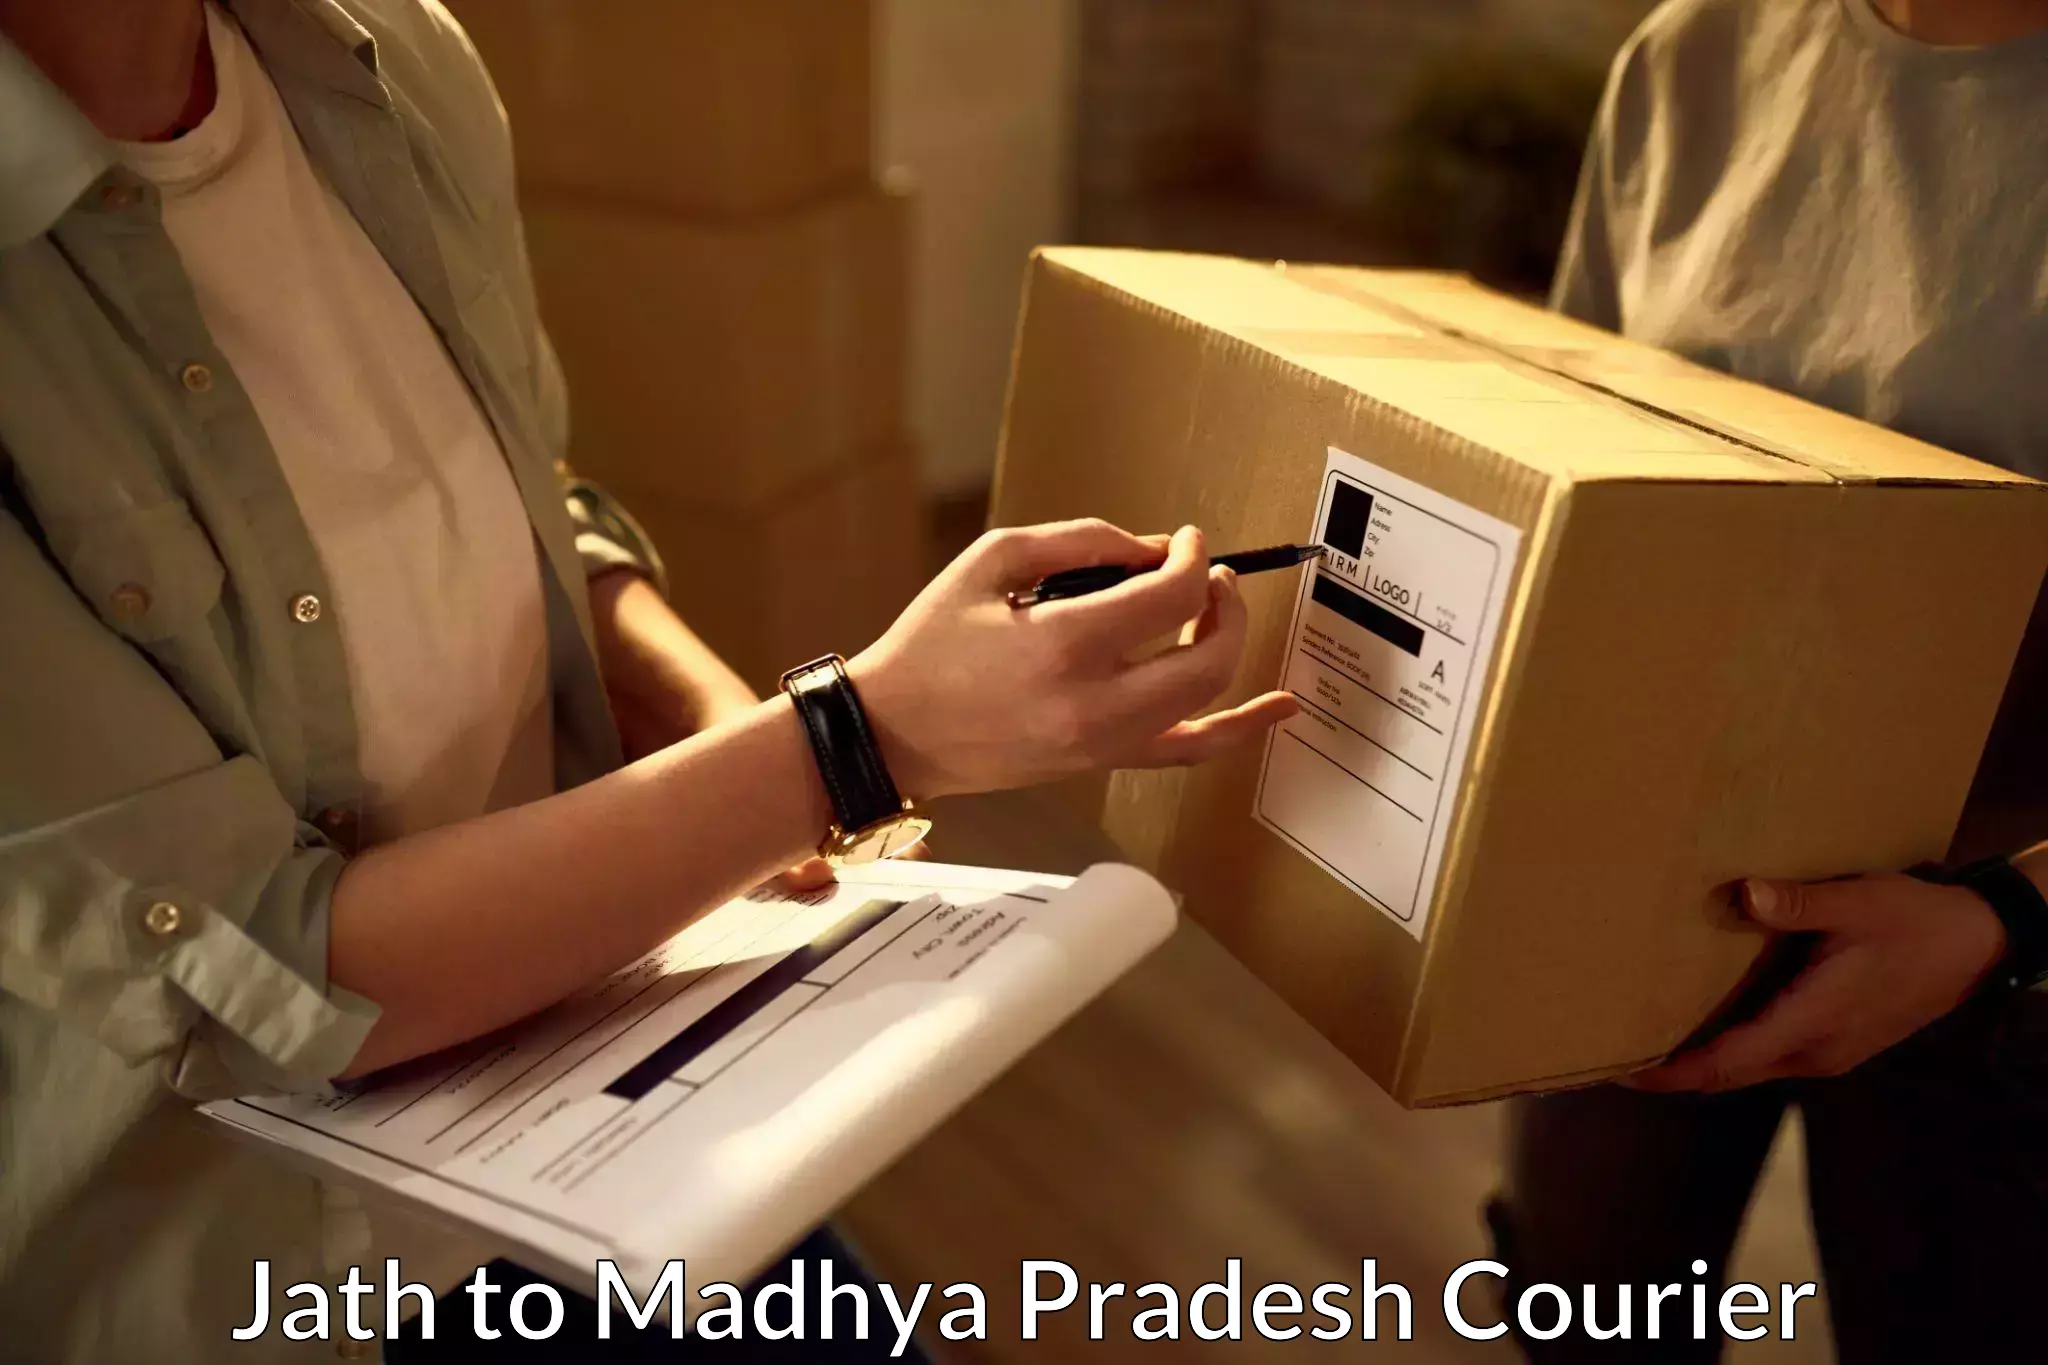 24/7 courier service Jath to Madhya Pradesh